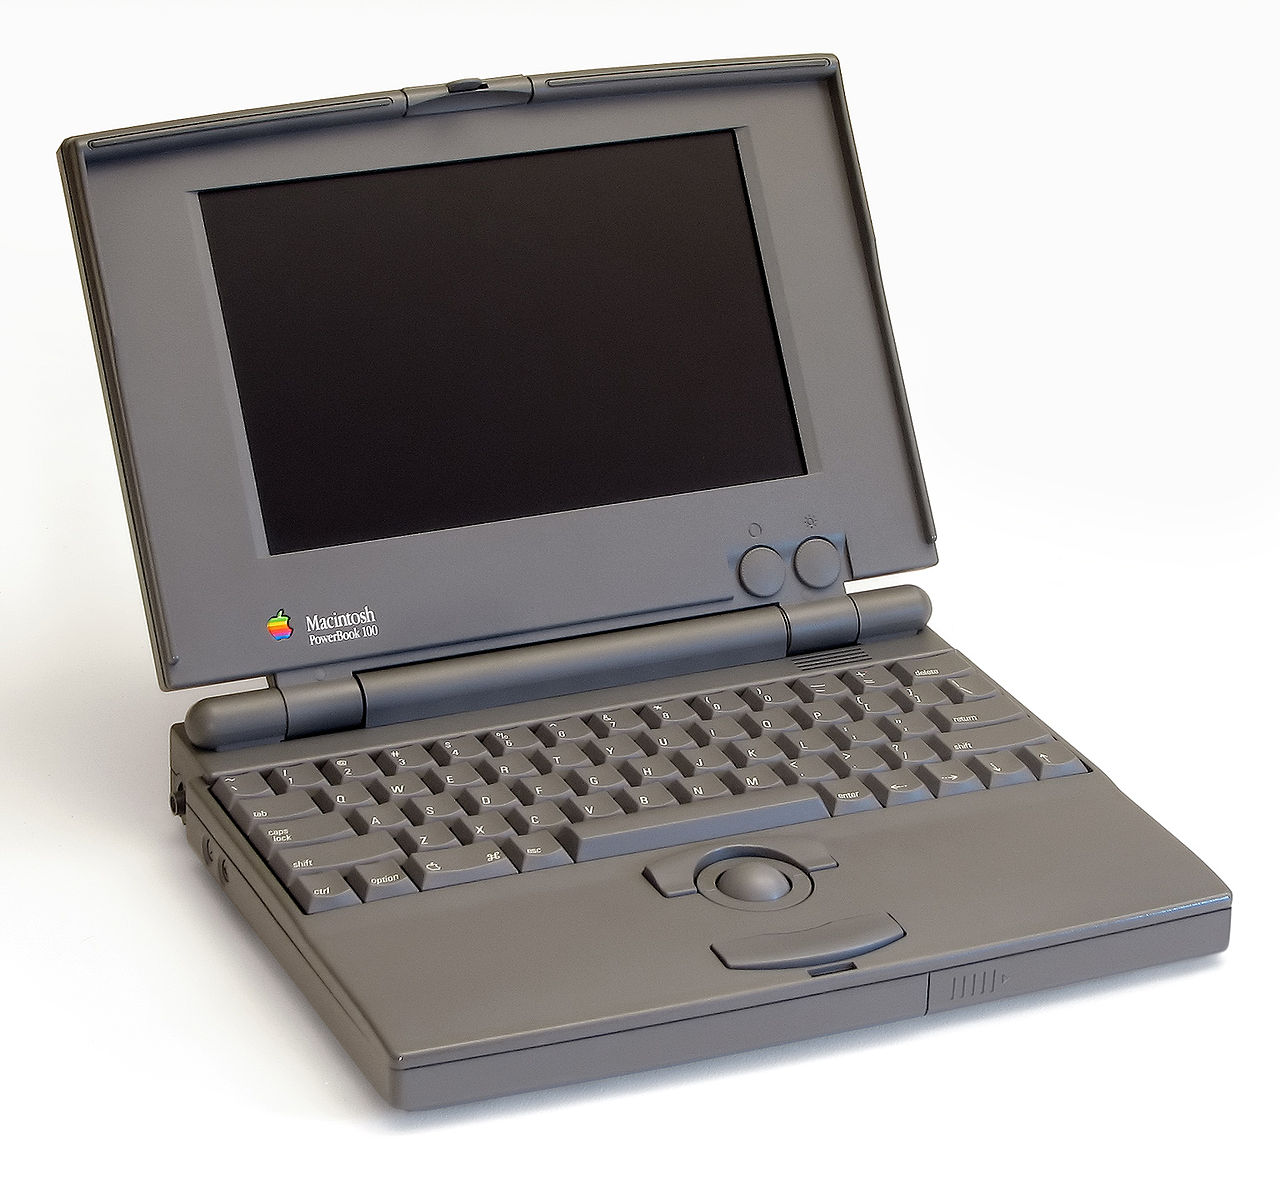 Apple Powerbook 100, источник Wikipedia